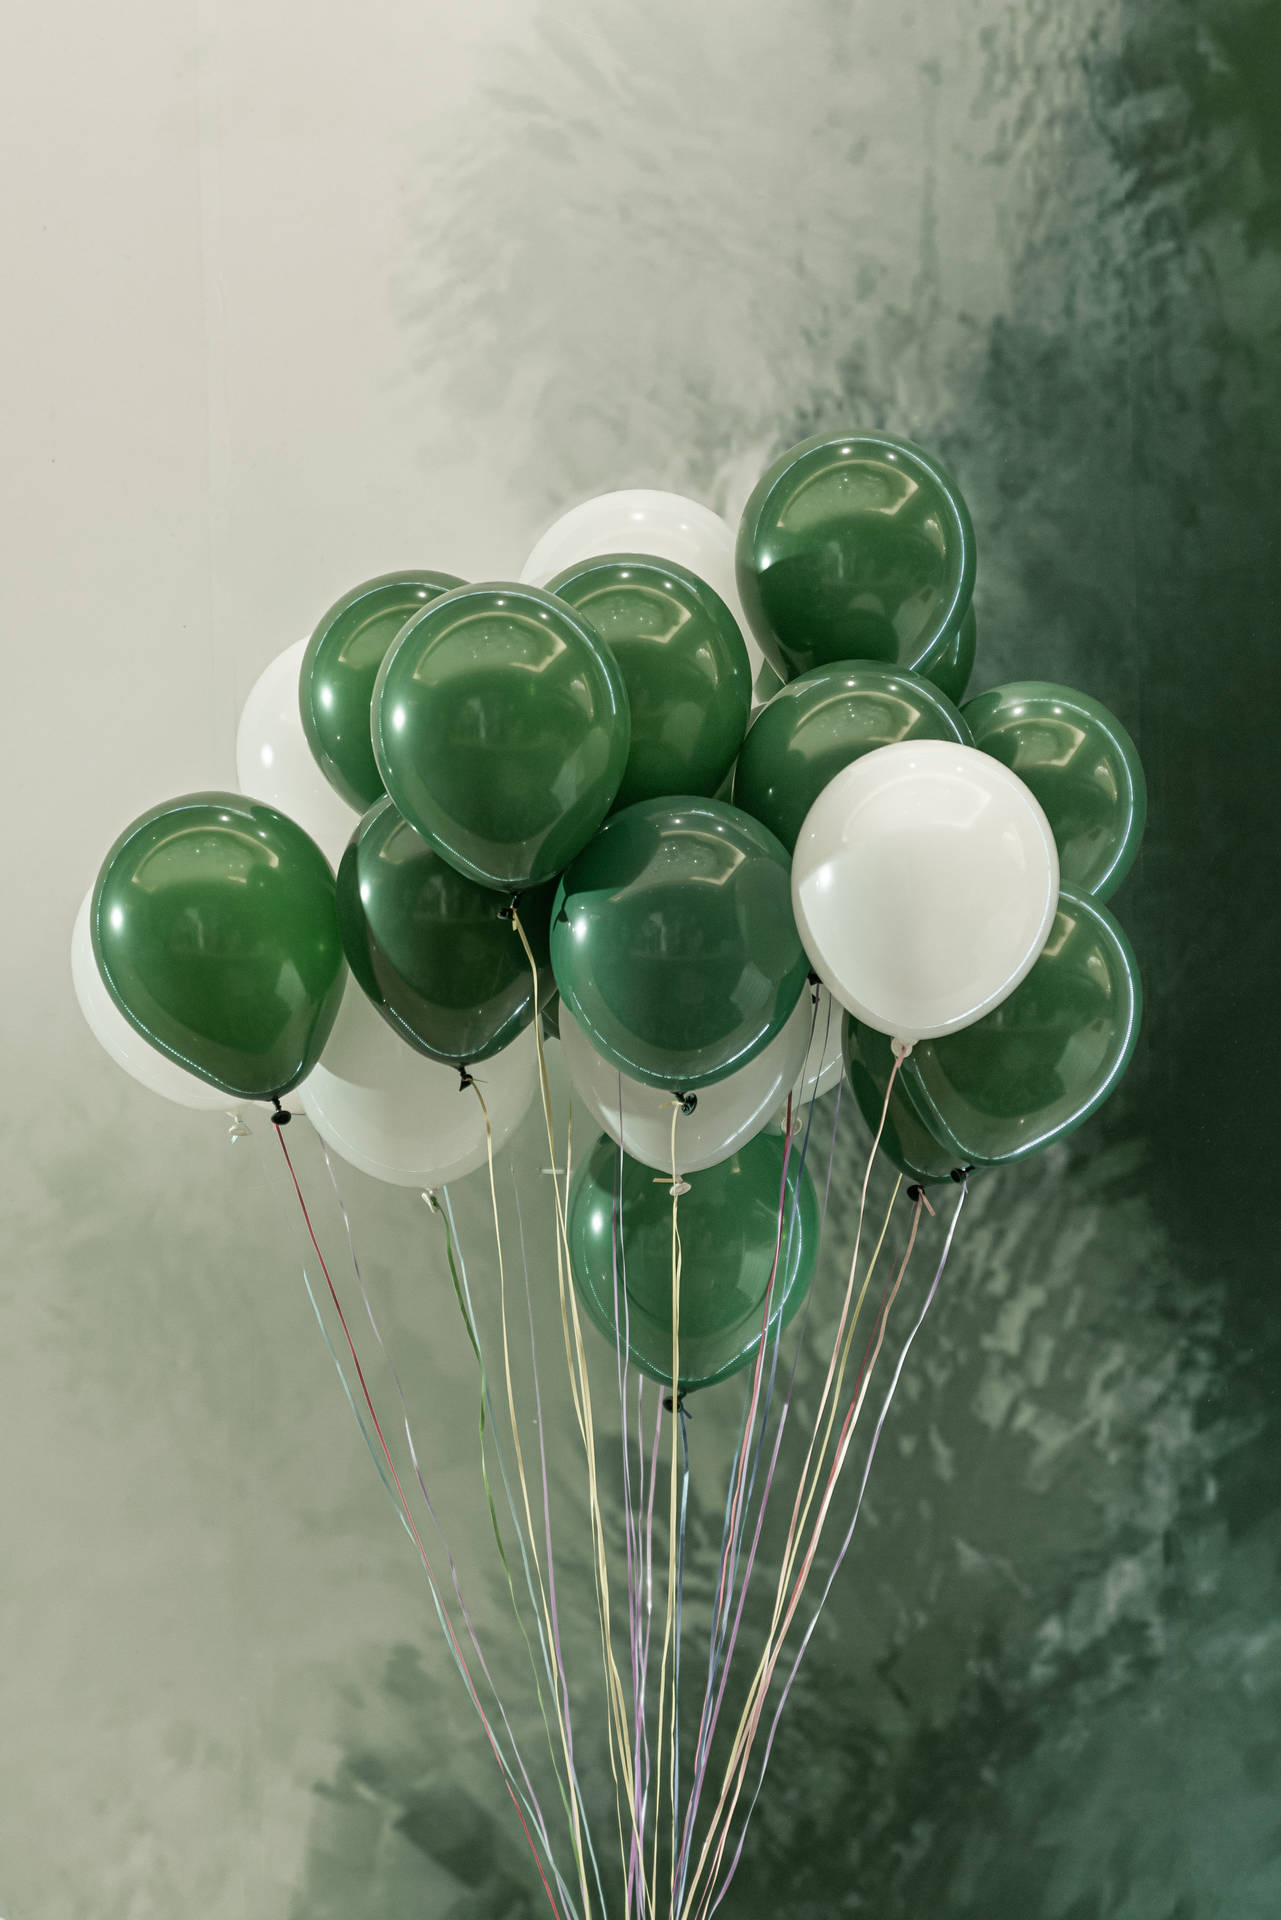 Glossy White Green Balloons Wallpaper